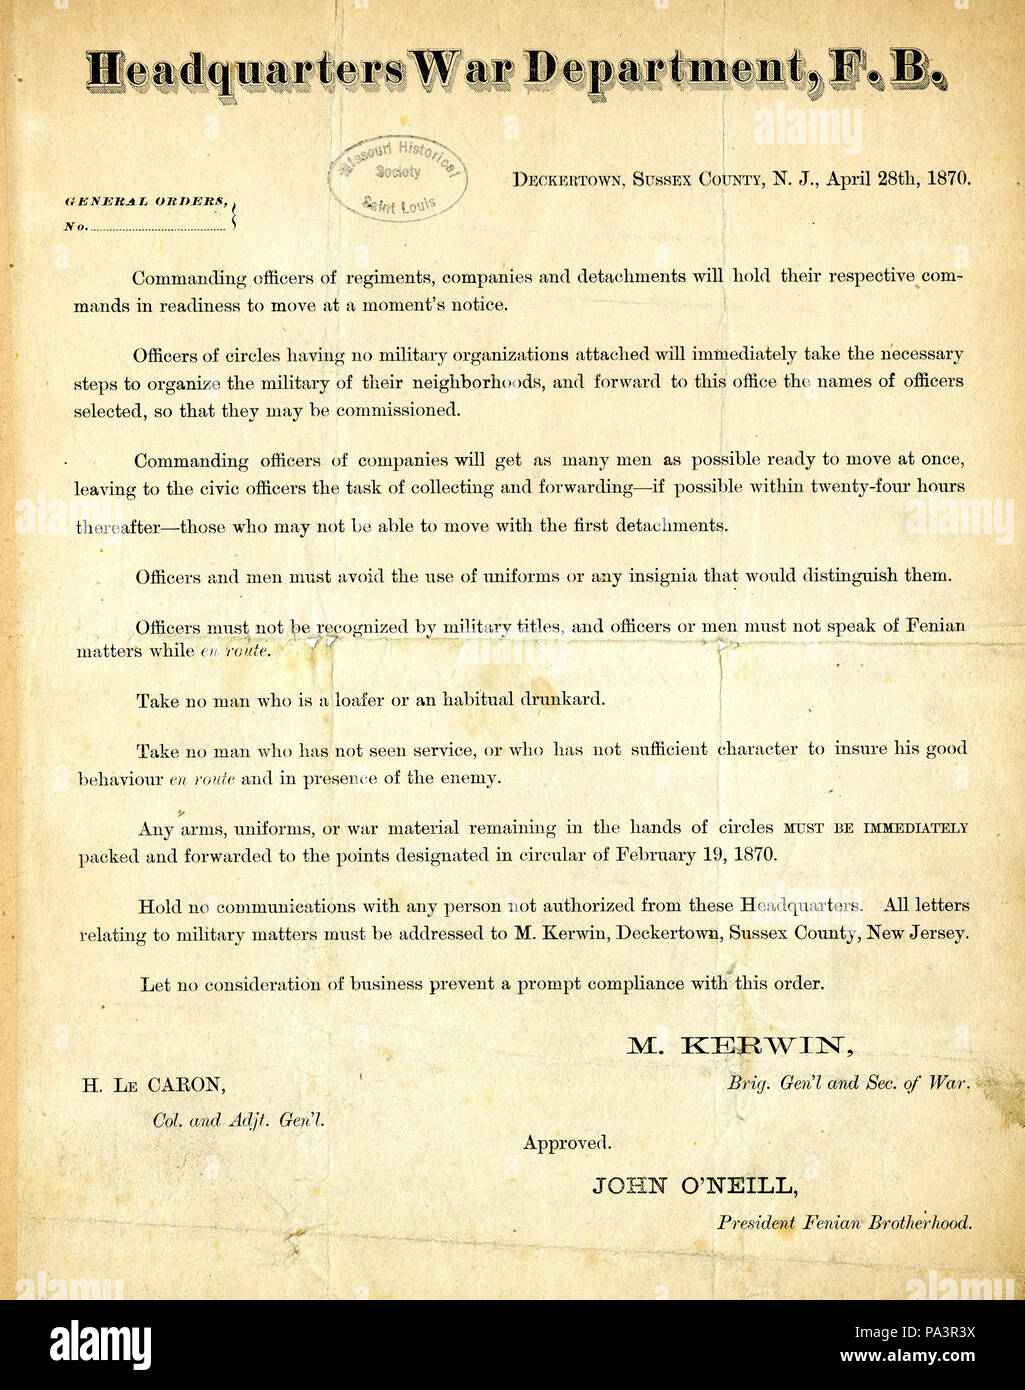 697 General Orders of M. Kerwin., Headquarters, War Department, Fenian Brotherhood, Deckertown, Sussex County, New Jersey, April 28, 1870 Stock Photo